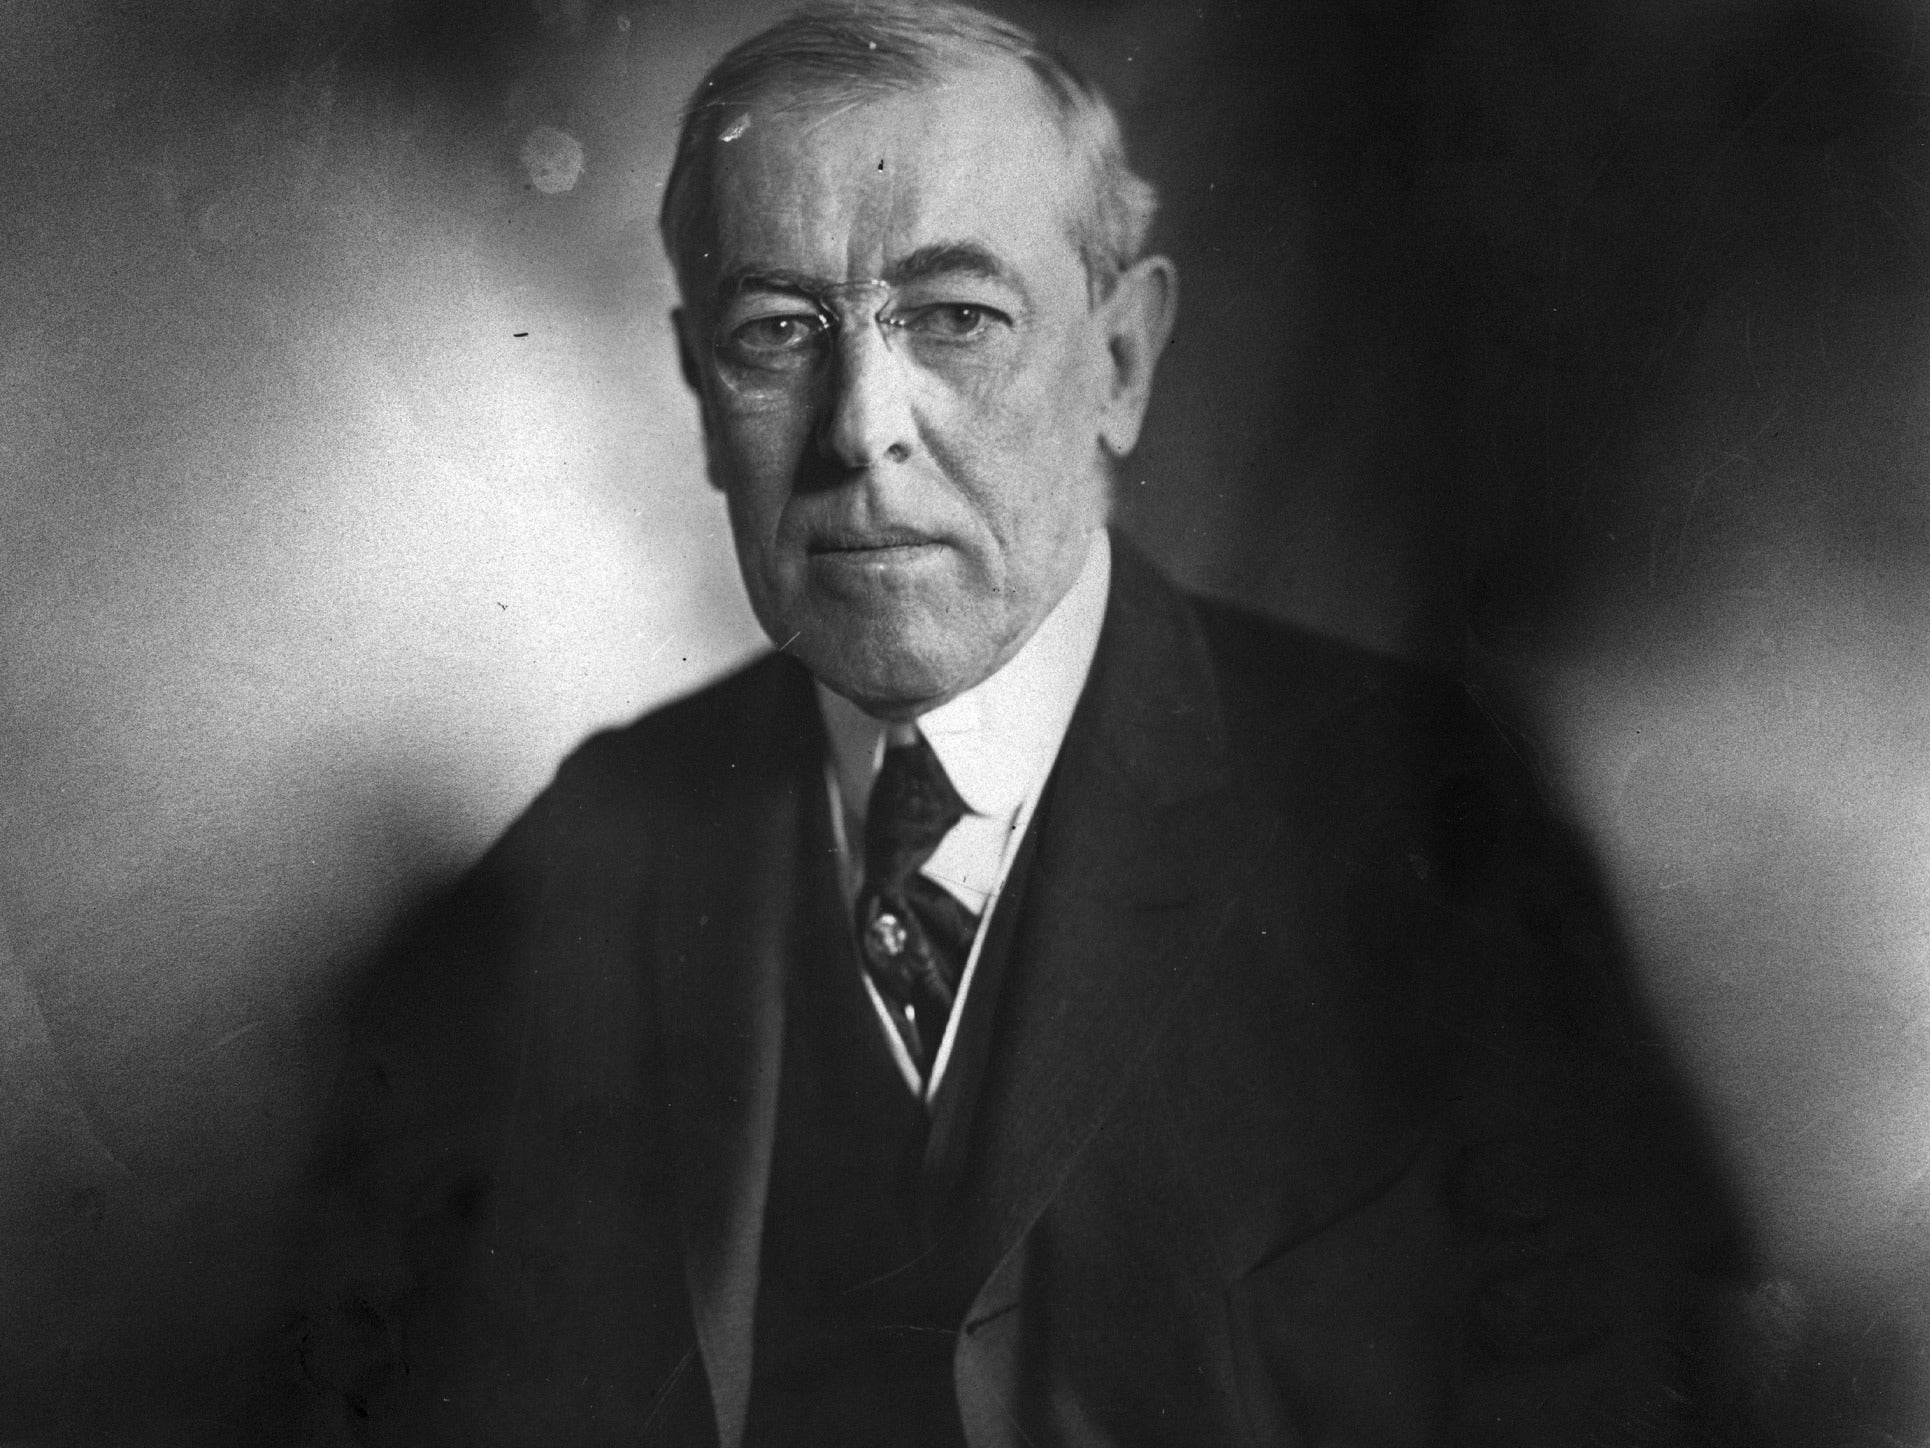 Princeton to remove Woodrow Wilson's name from international affairs school